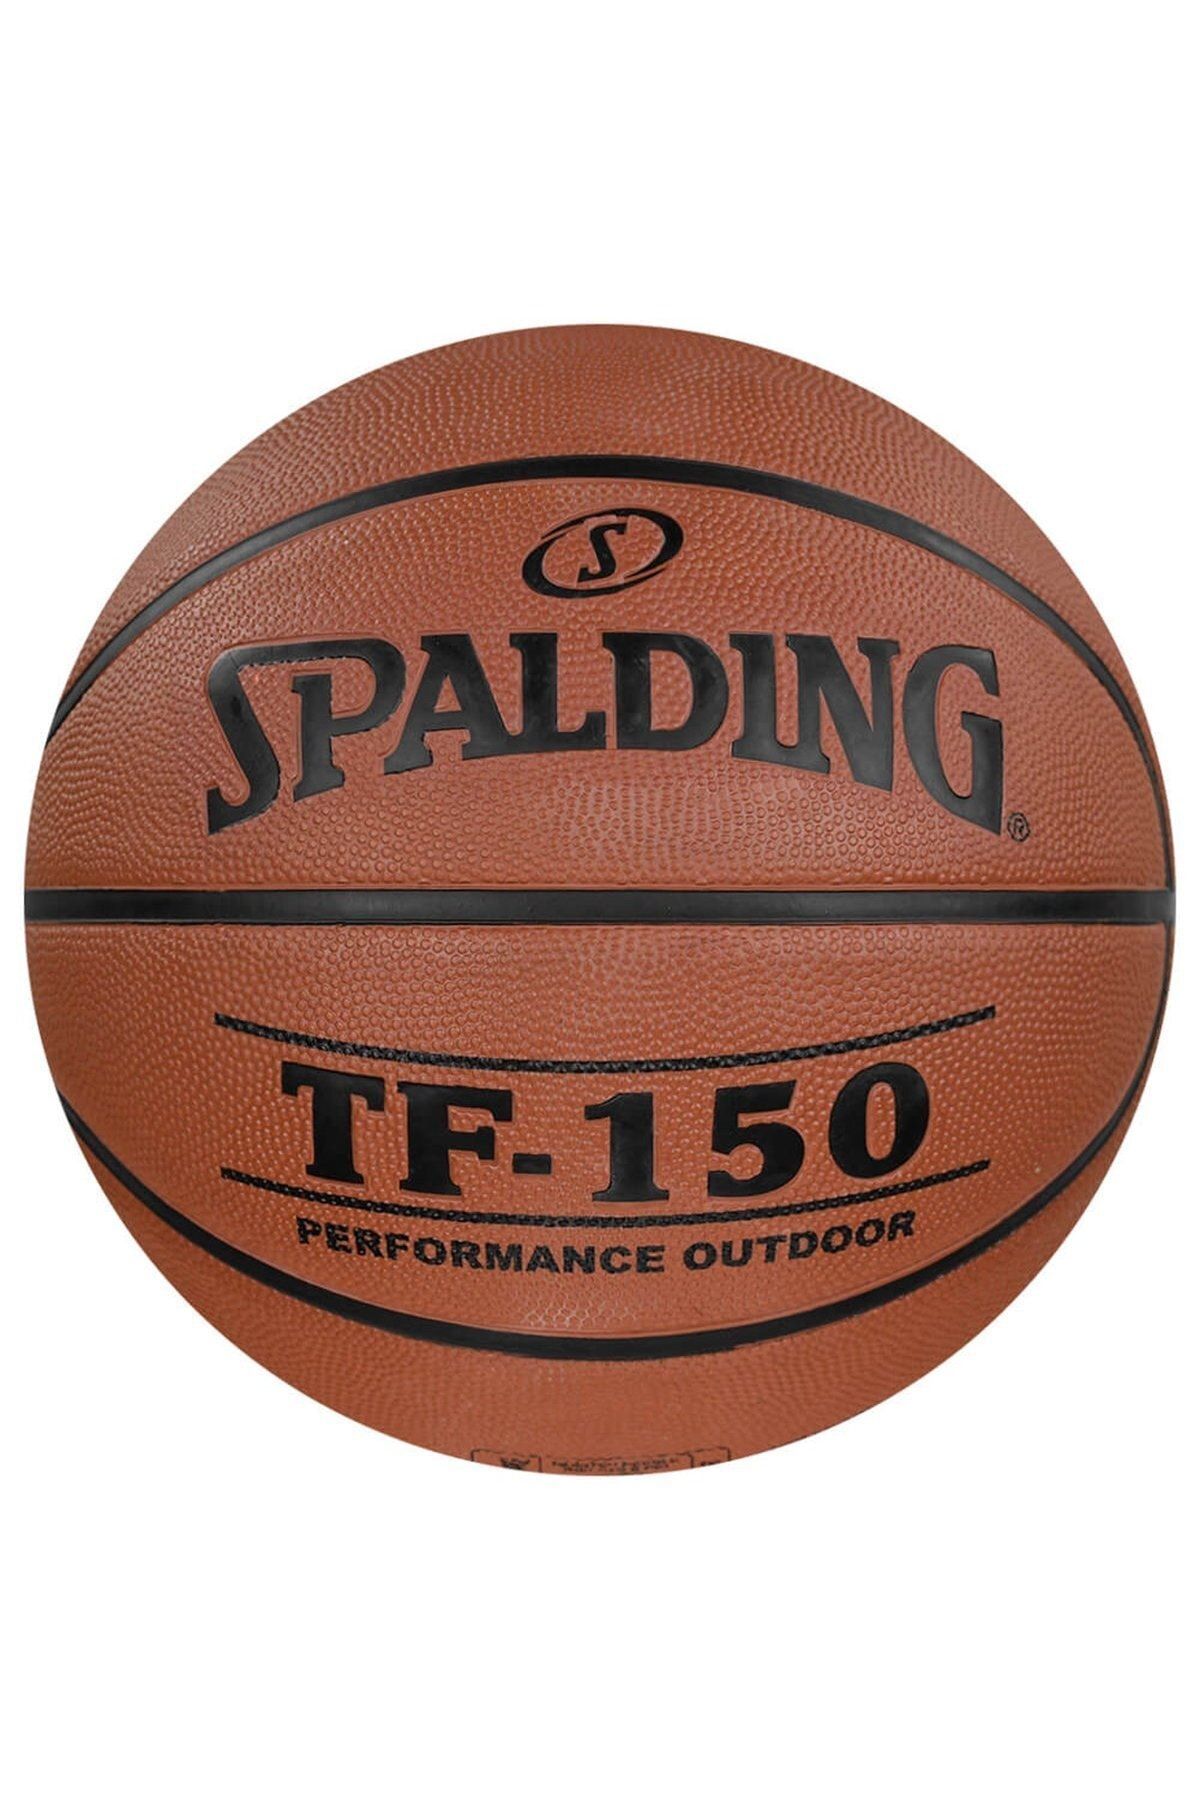 Spalding Tf-150 Kauçuk 7 No Basketbol Topu